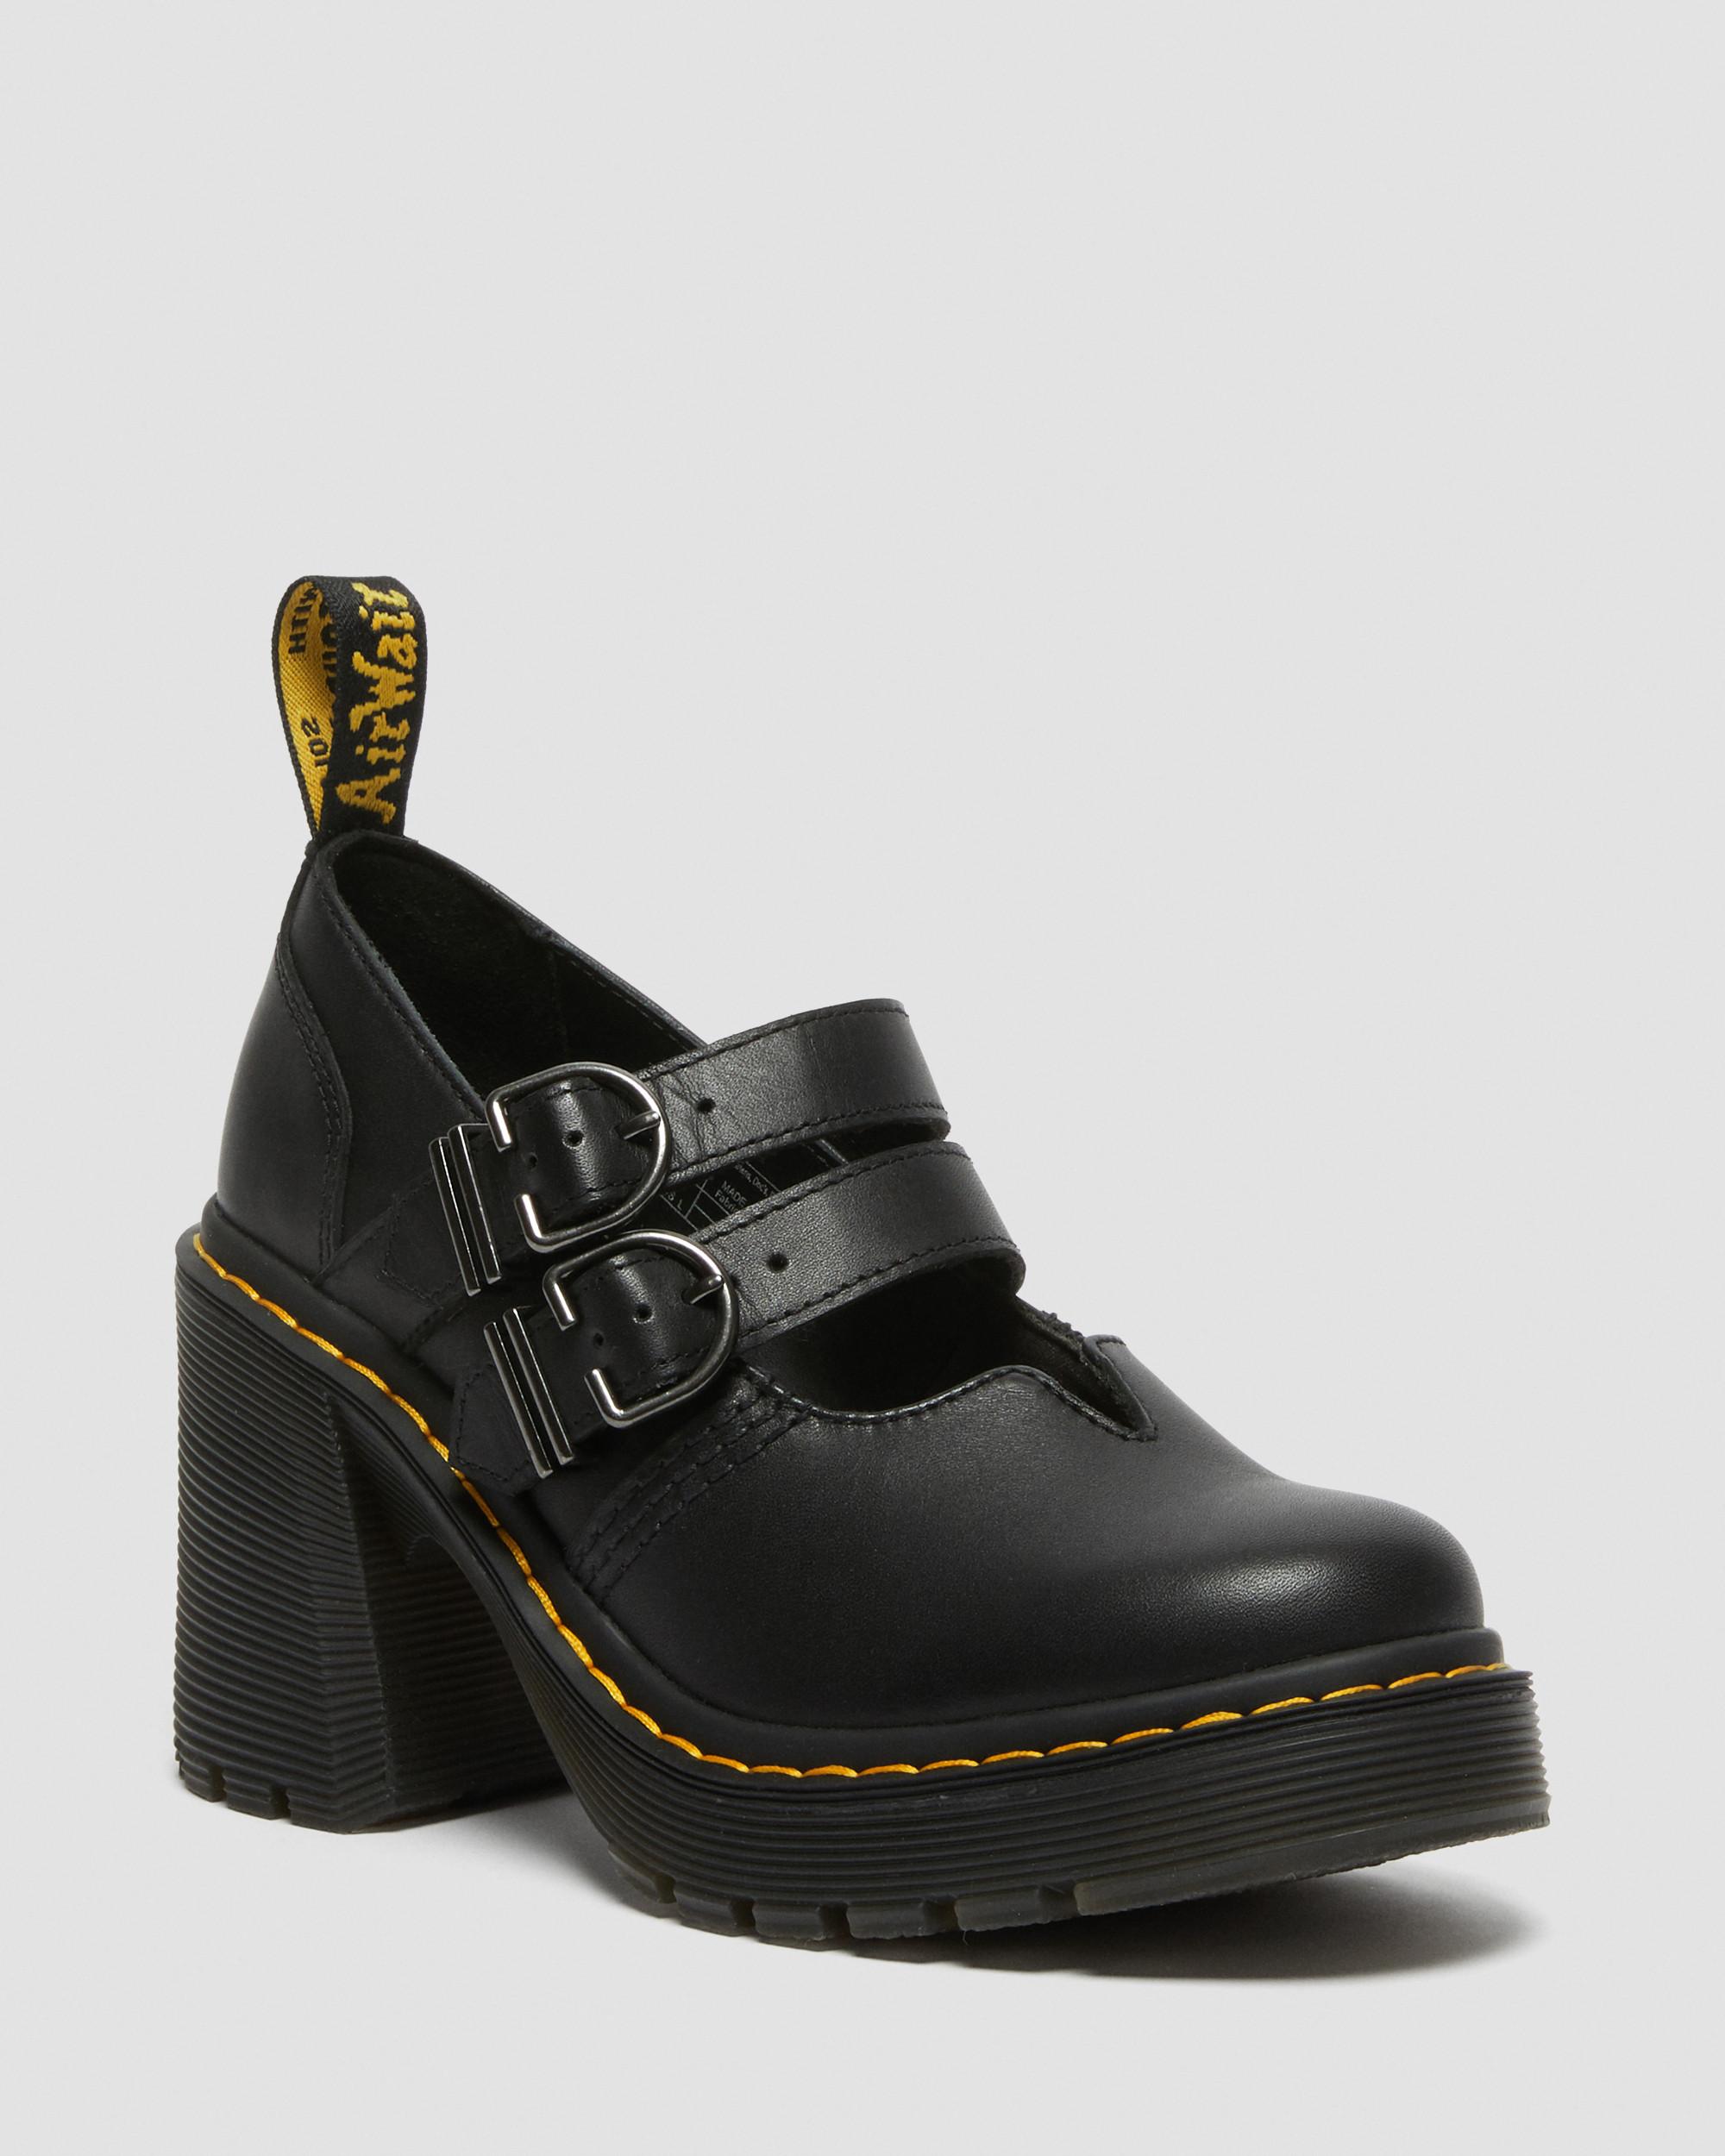 Black Croco Vegan Leather Mary Jane Pumps Chunky Heels Platform Pumps US 10 / EU 40-Black